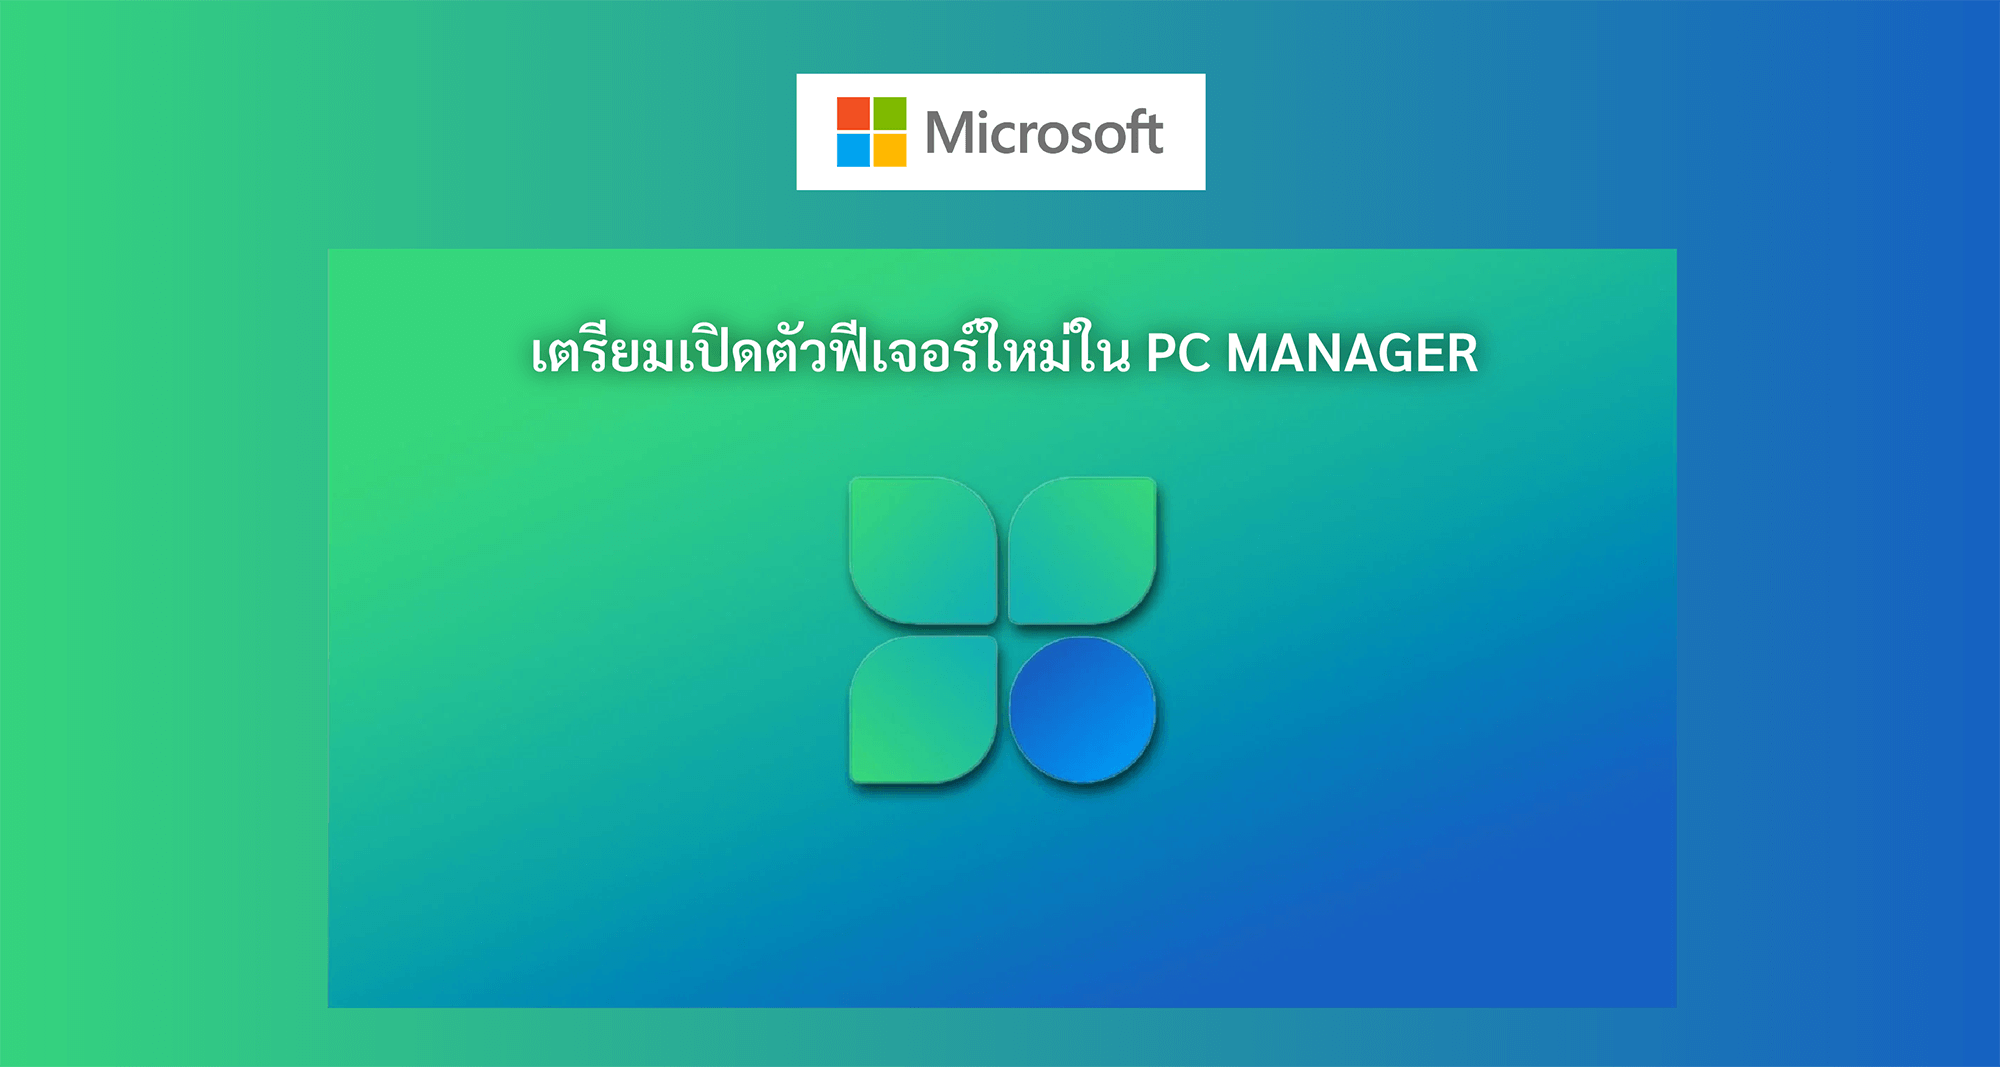 Microsoft เตรียมเปิดตัวฟีเจอร์ใหม่ใน PC Manager